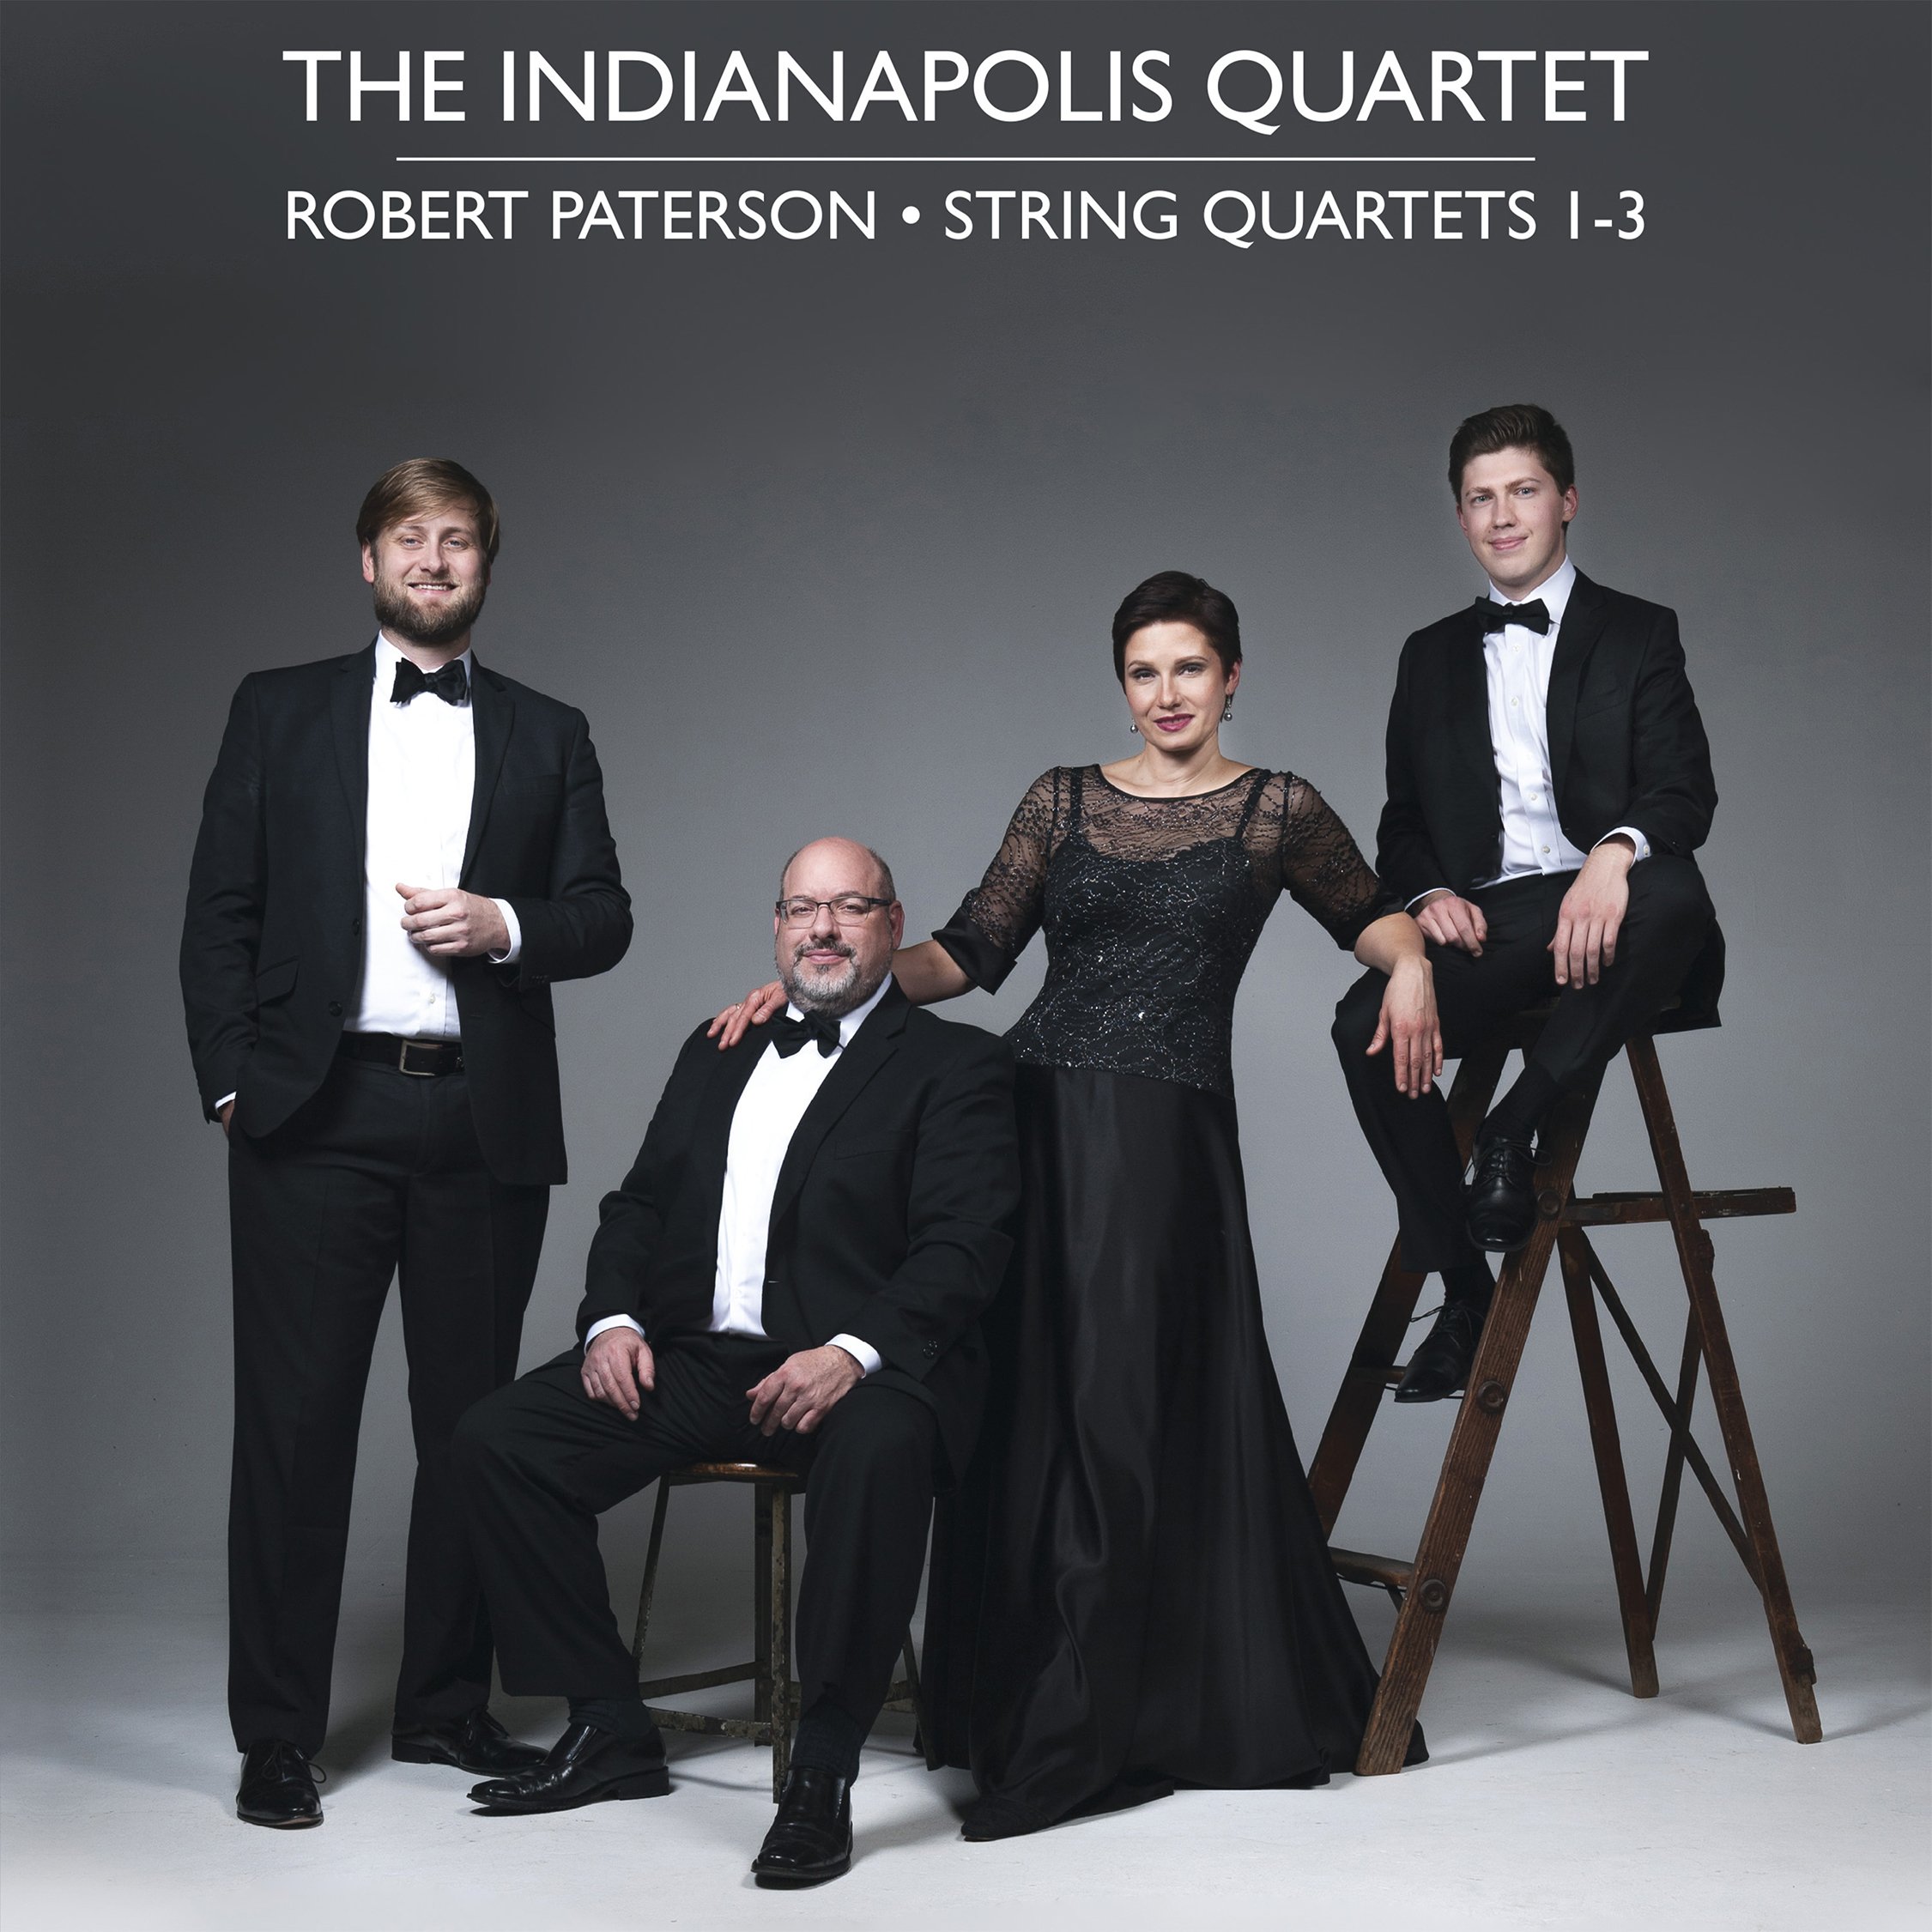 The Indianapolis Quartet: Robert Paterson - String Quartets 1-3